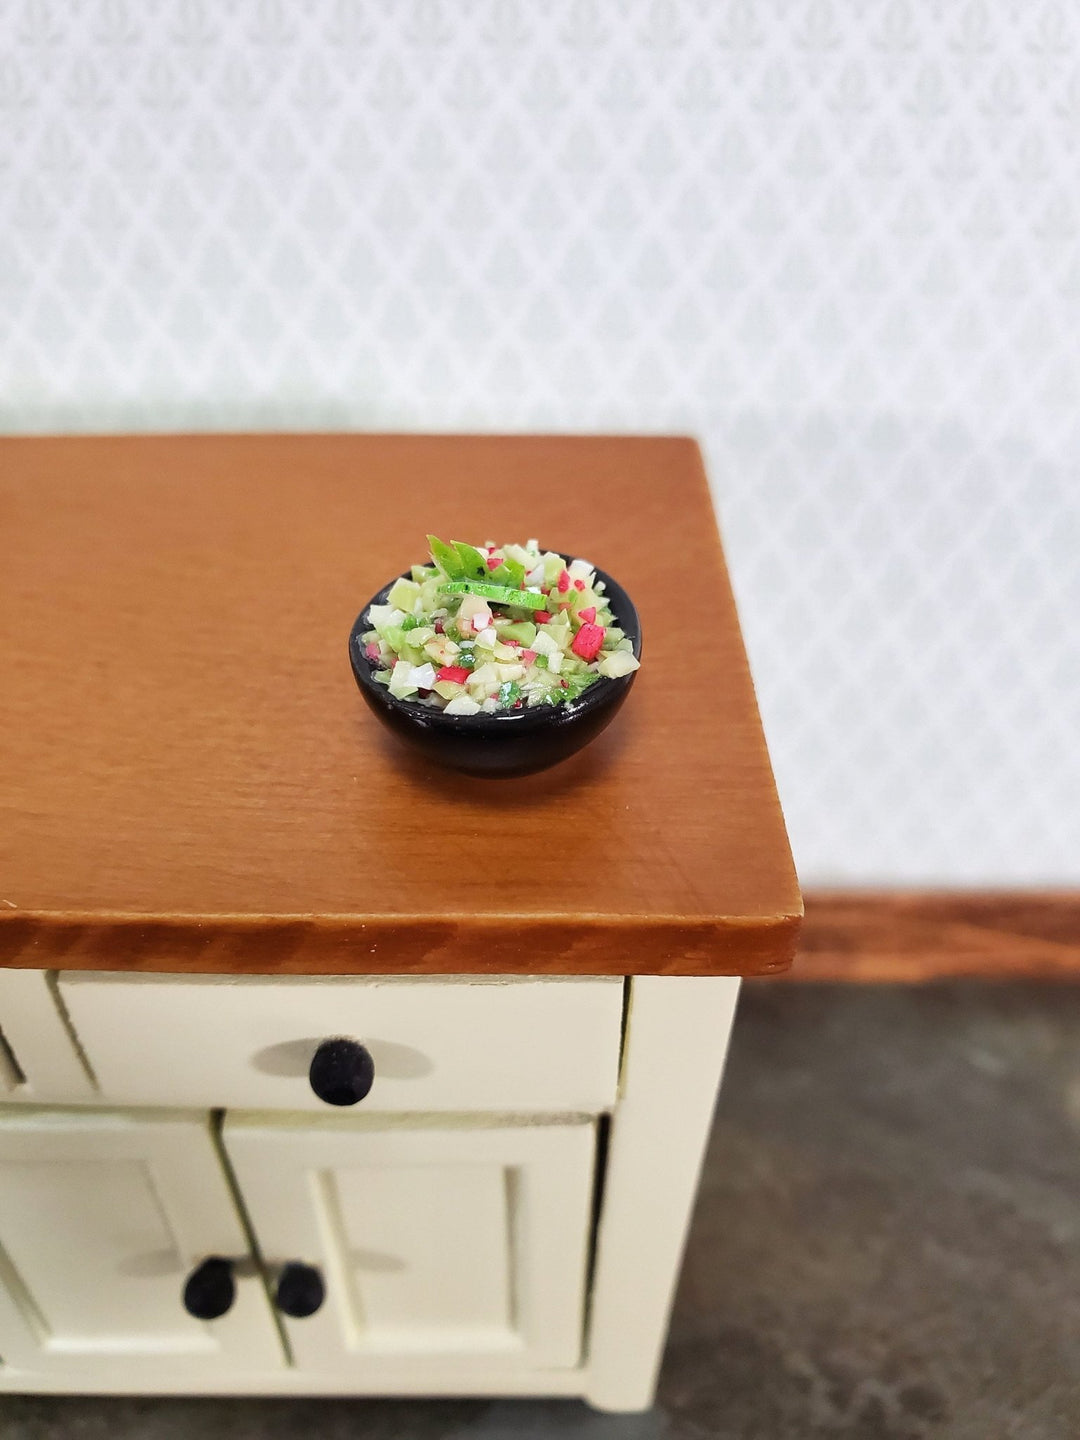 Miniature Bowl of Guacamole Salsa with Lime Slice 1:12 Scale Dollhouse Food - Miniature Crush